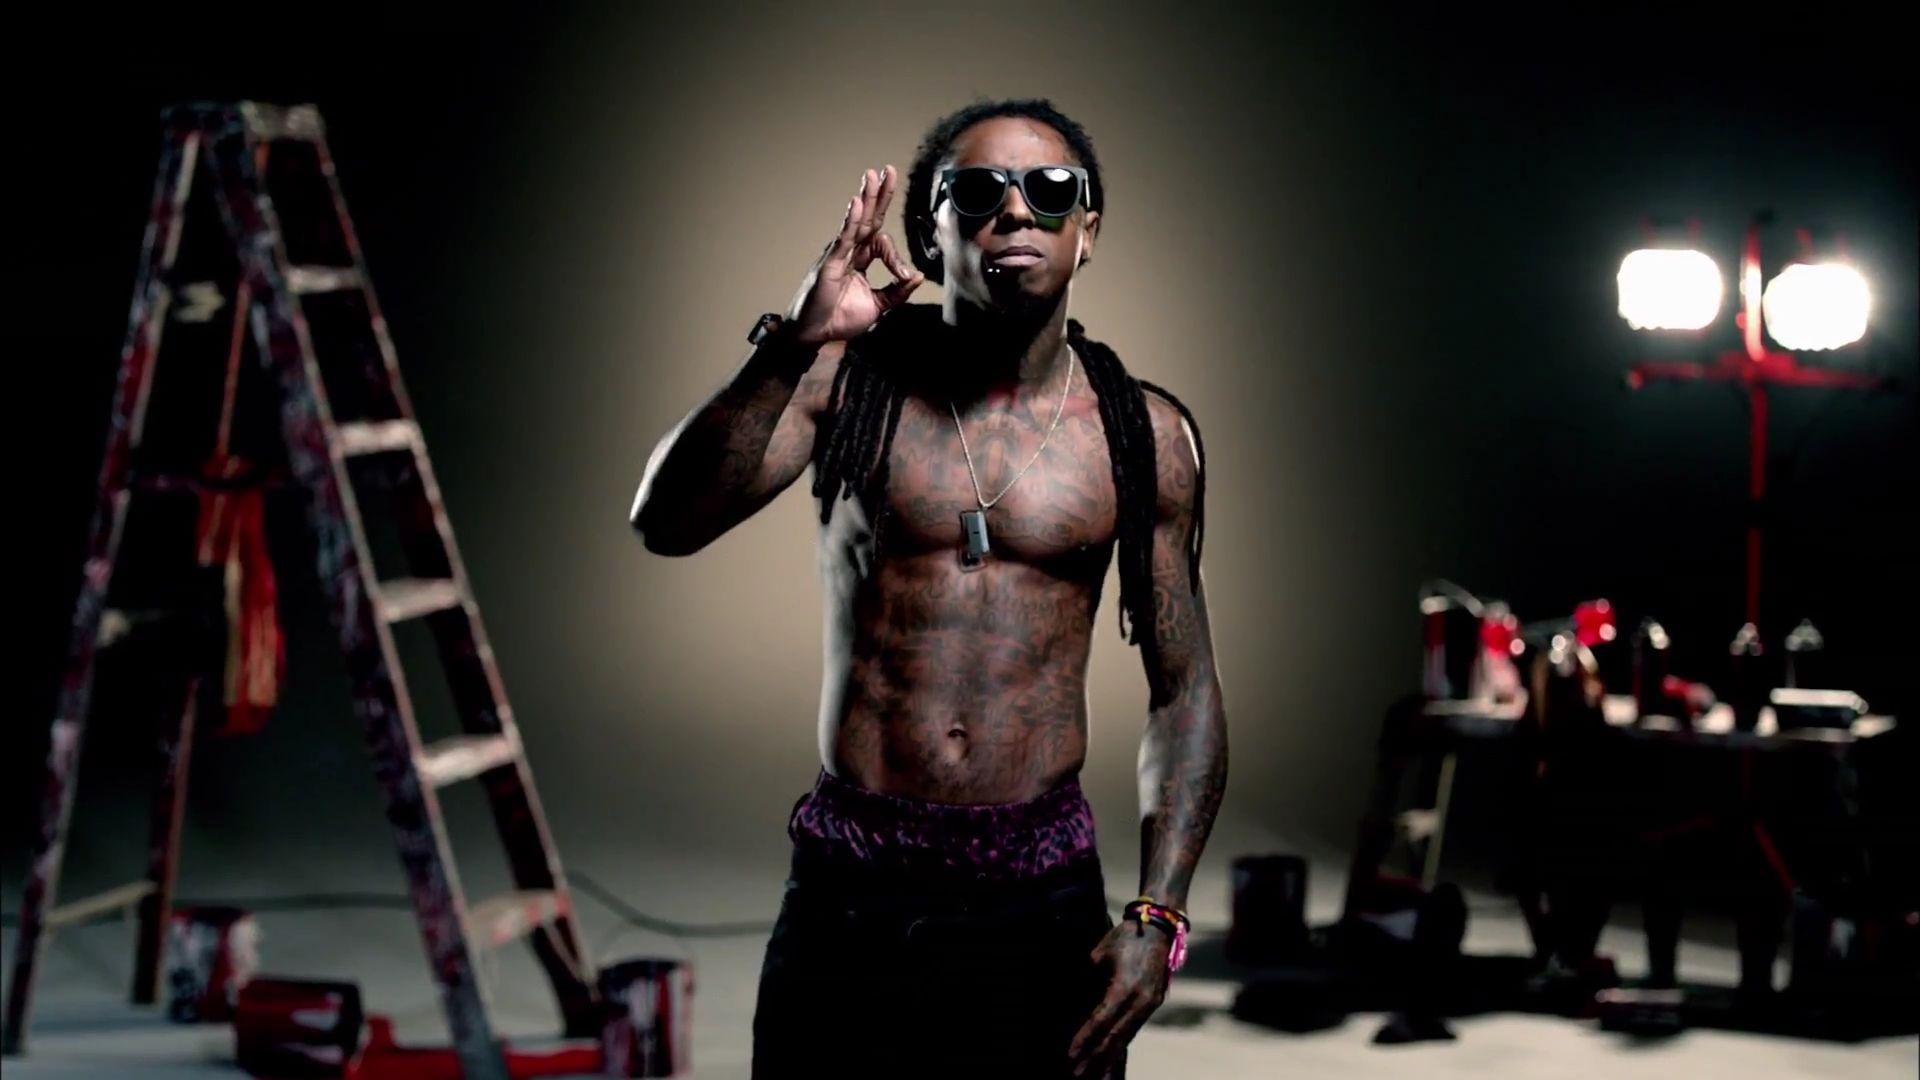 Lil Wayne Wallpaper, High Definition, High Quality